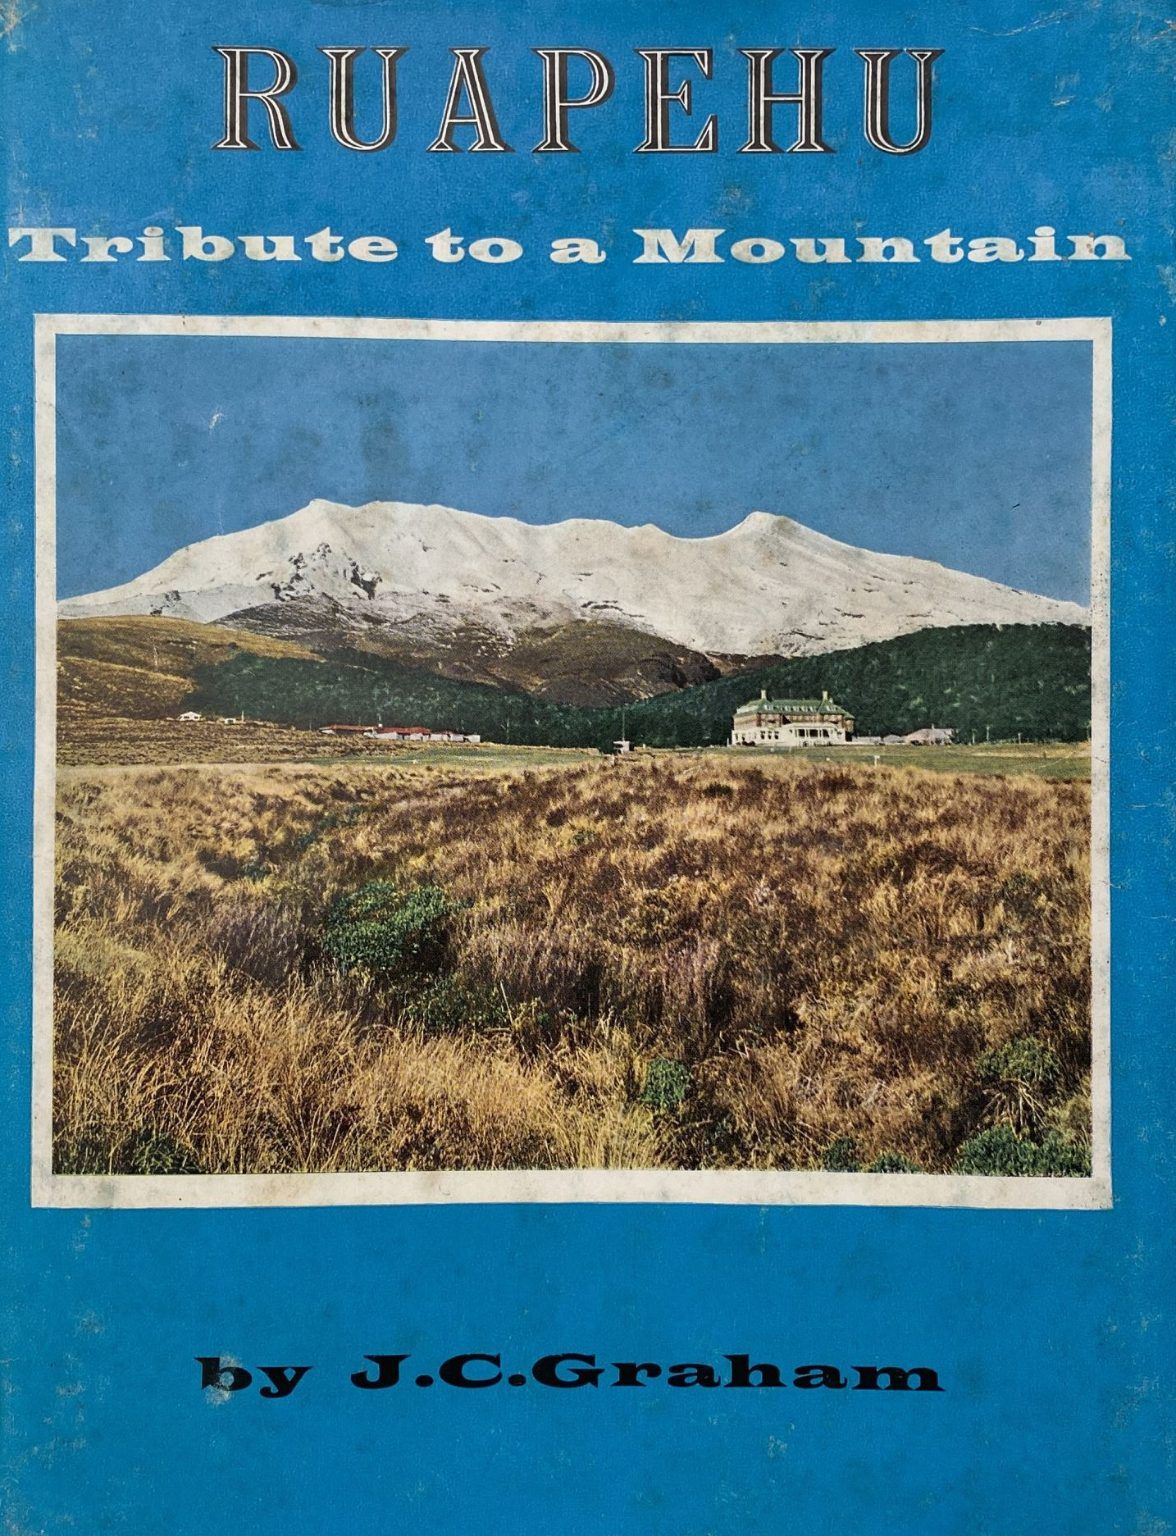 RUAPEHU: Tribute to a Mountain